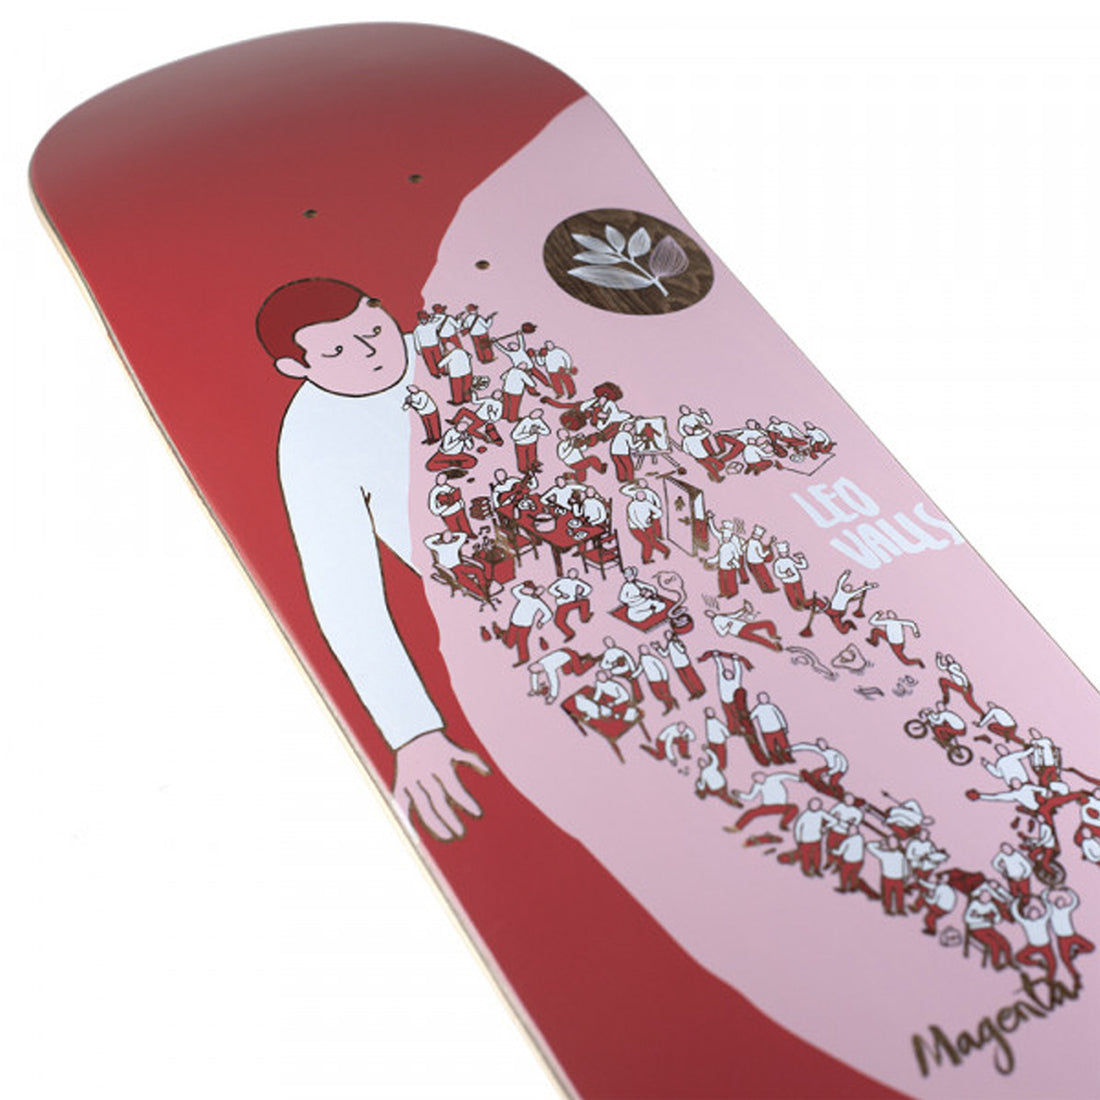 Magenta Leo Valls Extravision 7.875" Skateboard Deck